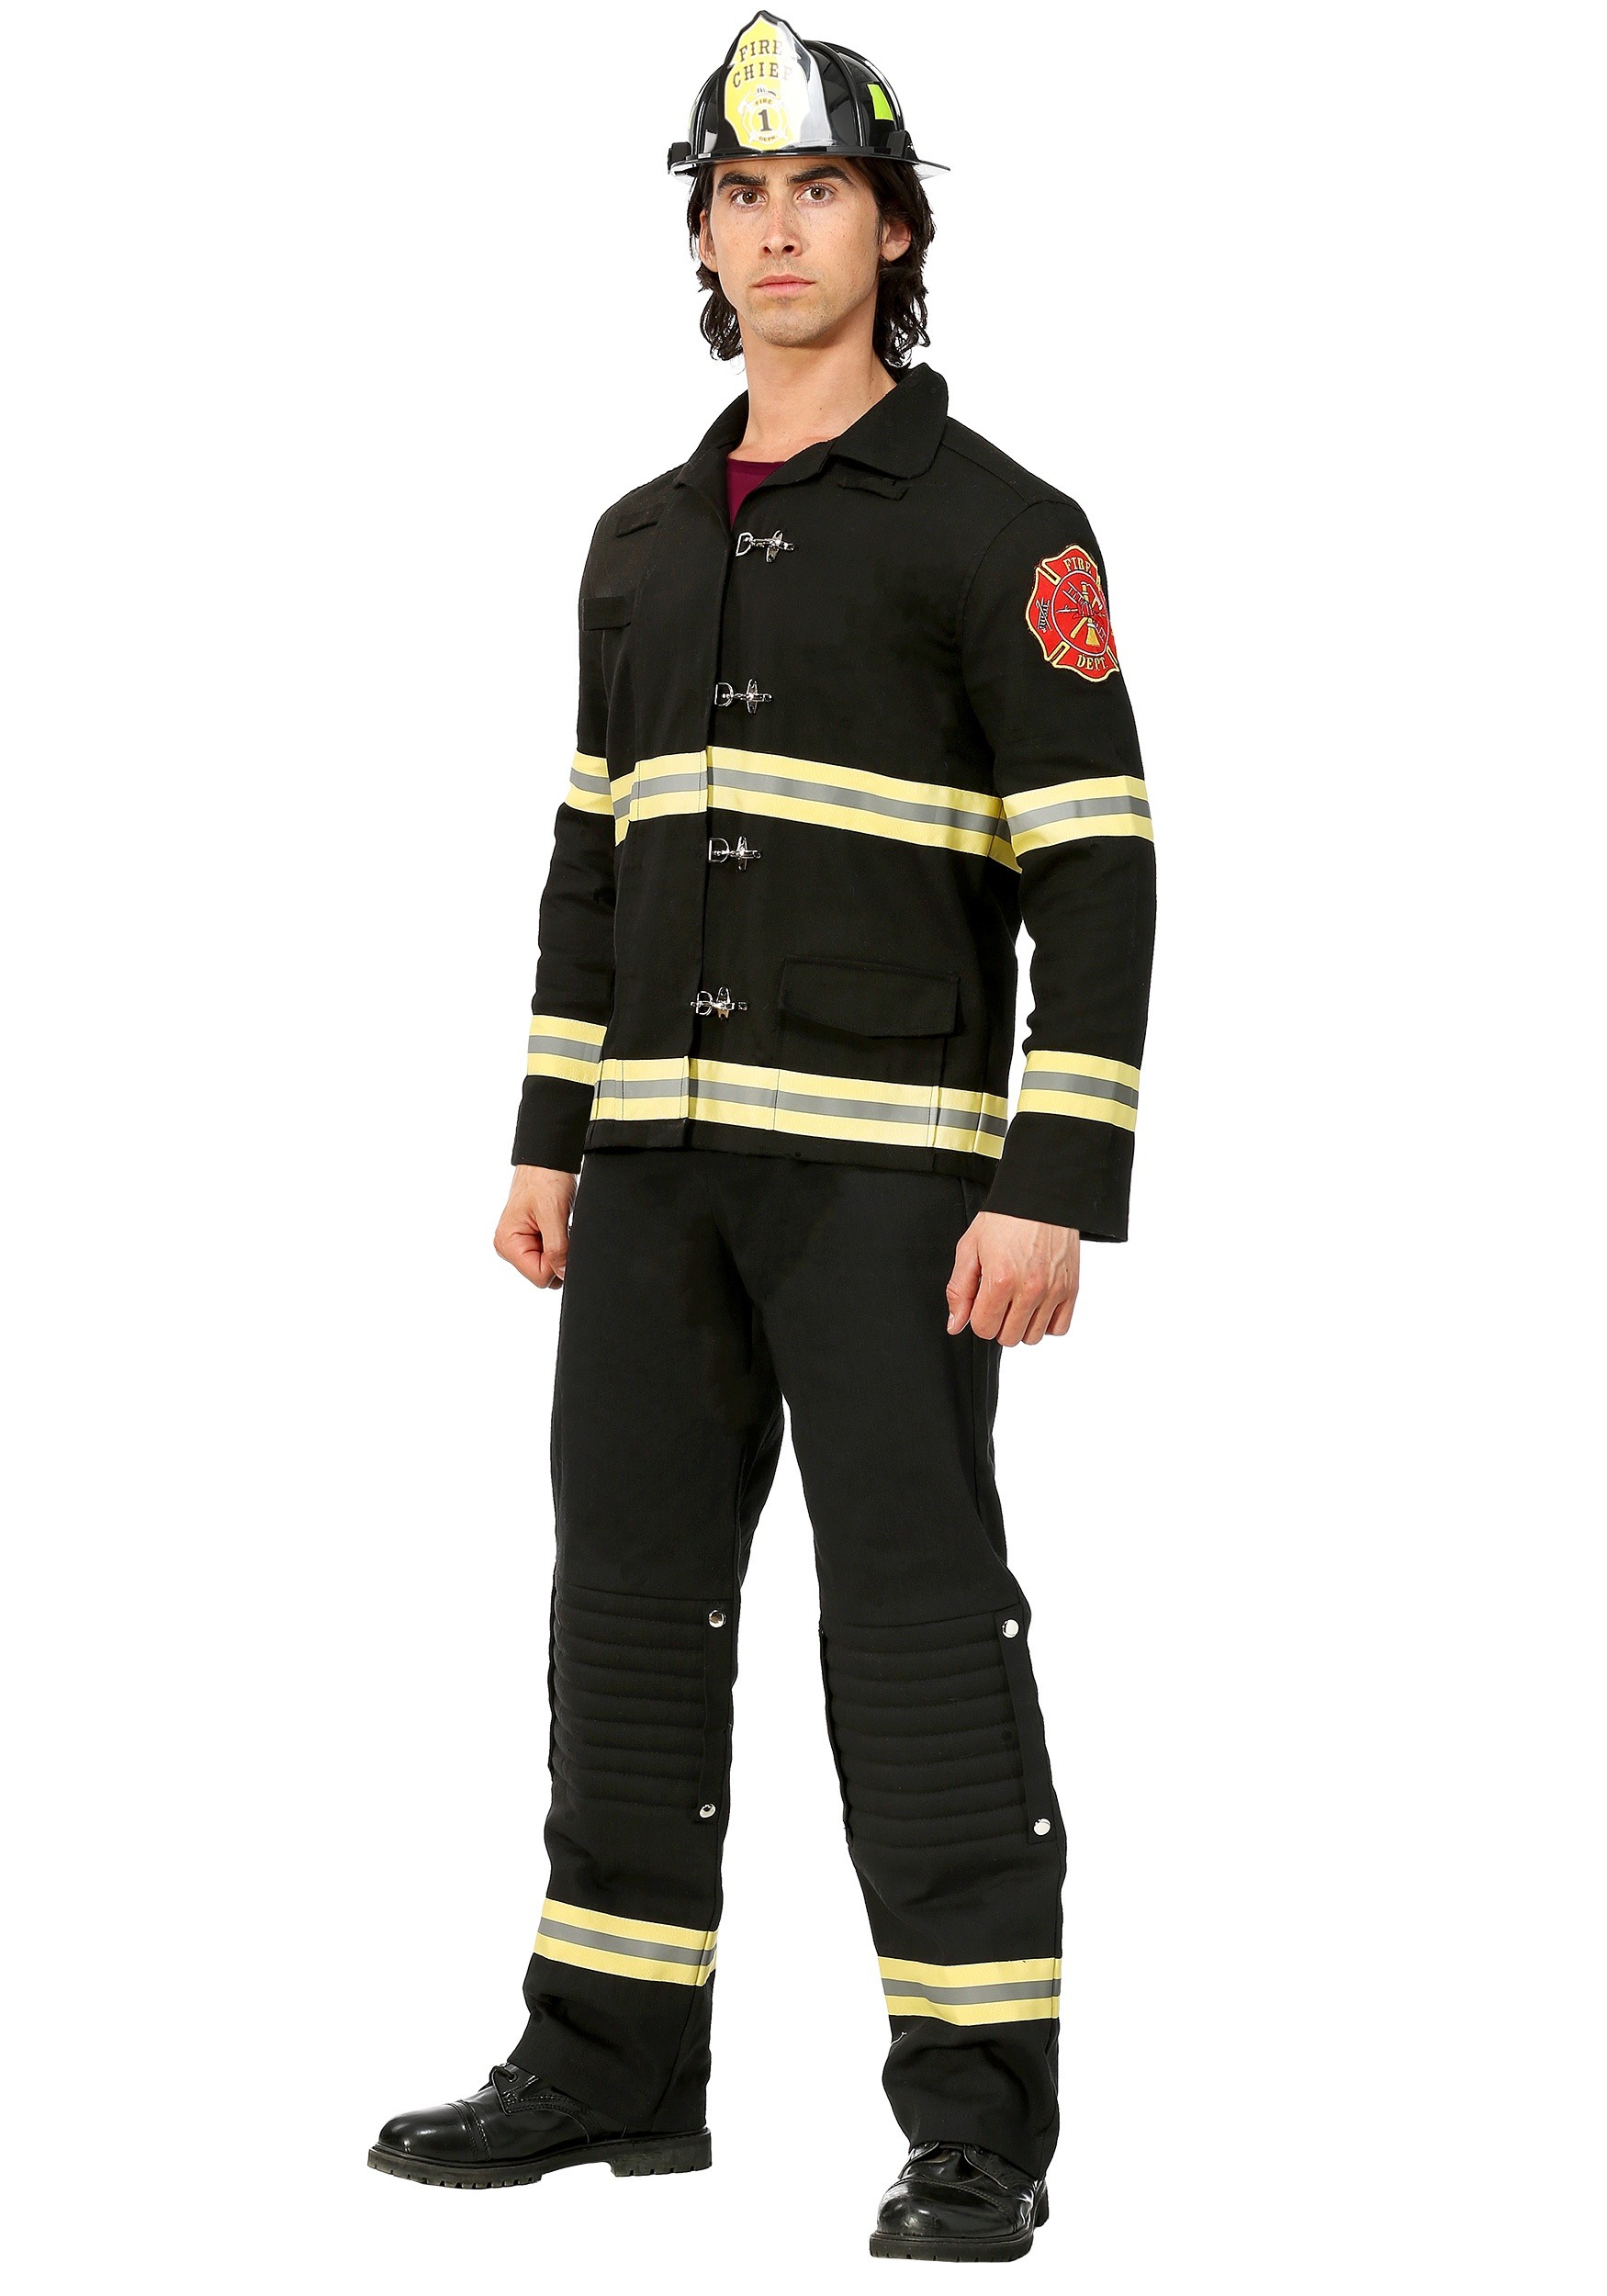 Black Uniform Firefighter Adult Costume